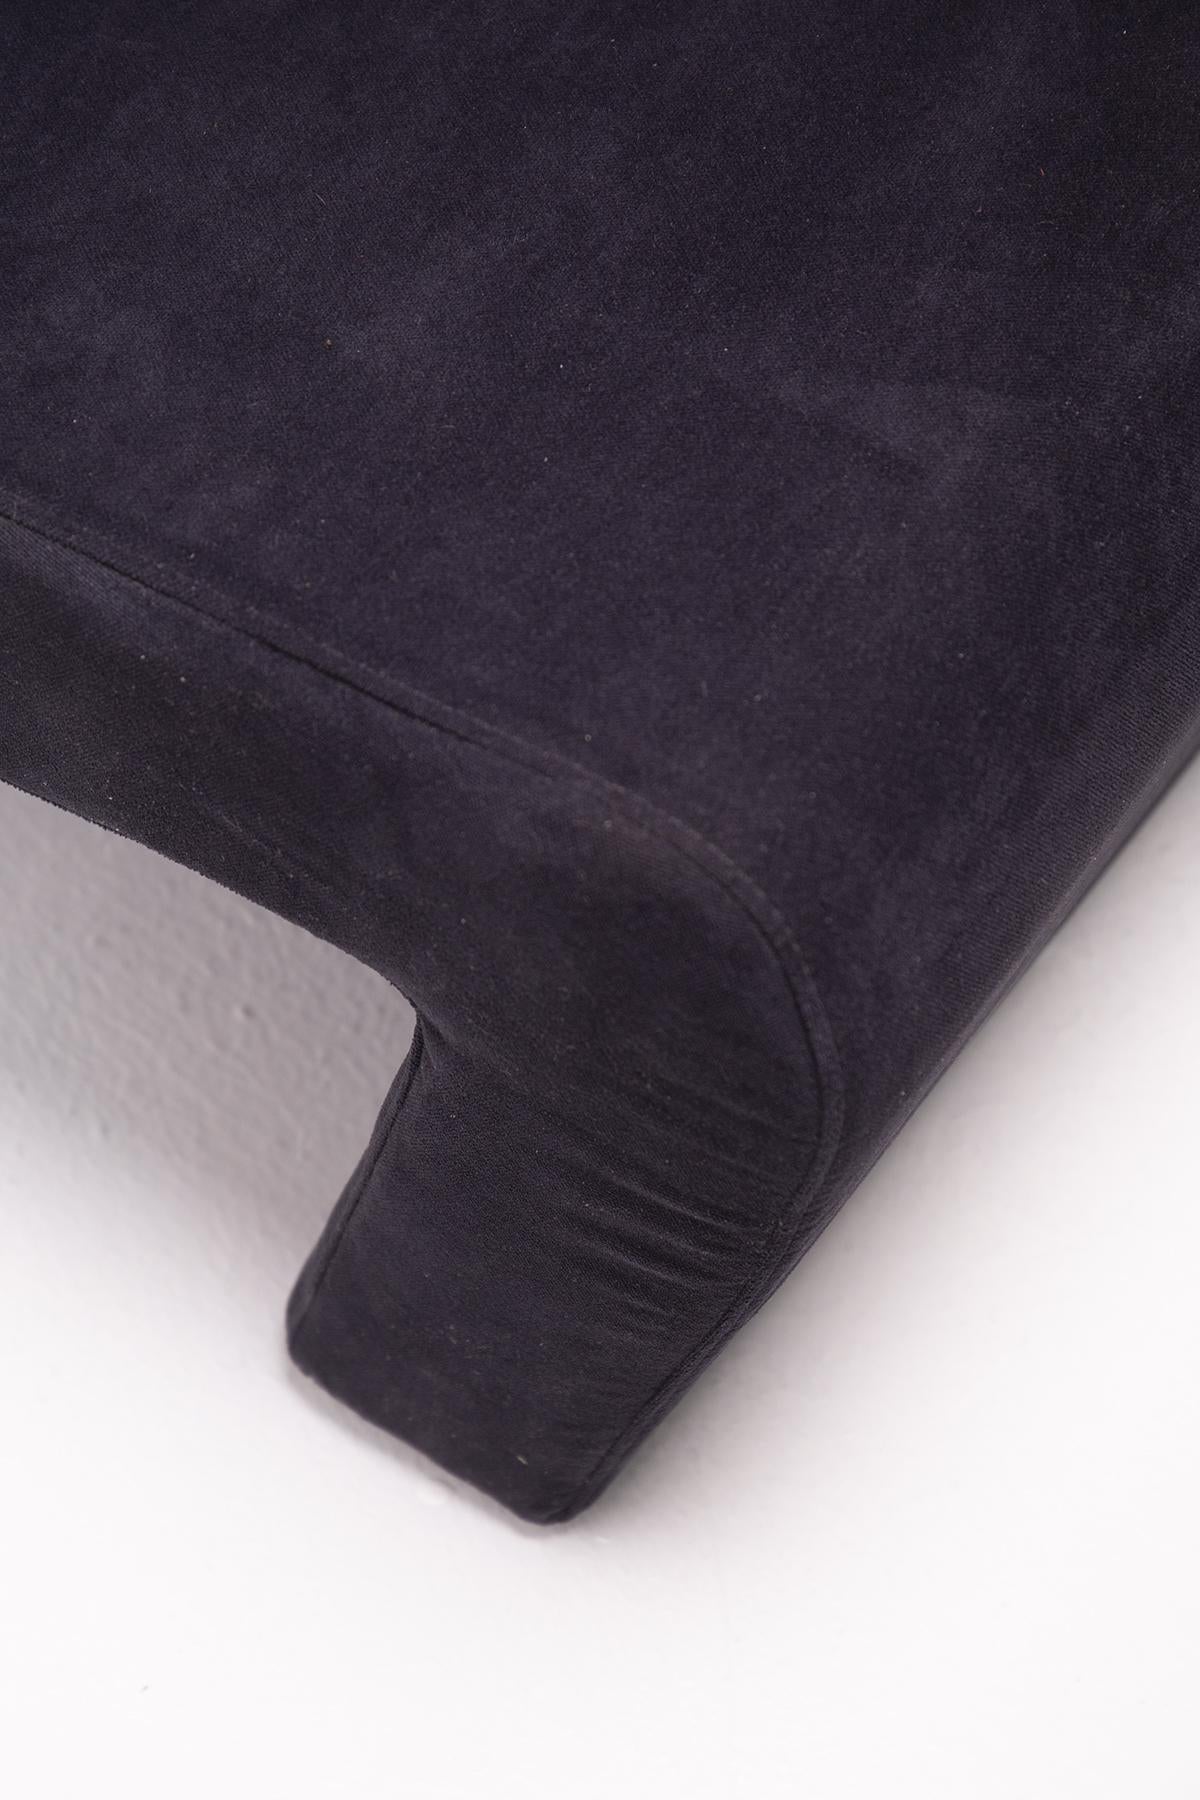 Italian Sofa in Black Velvet and Steel by MDF Italia For Sale 2